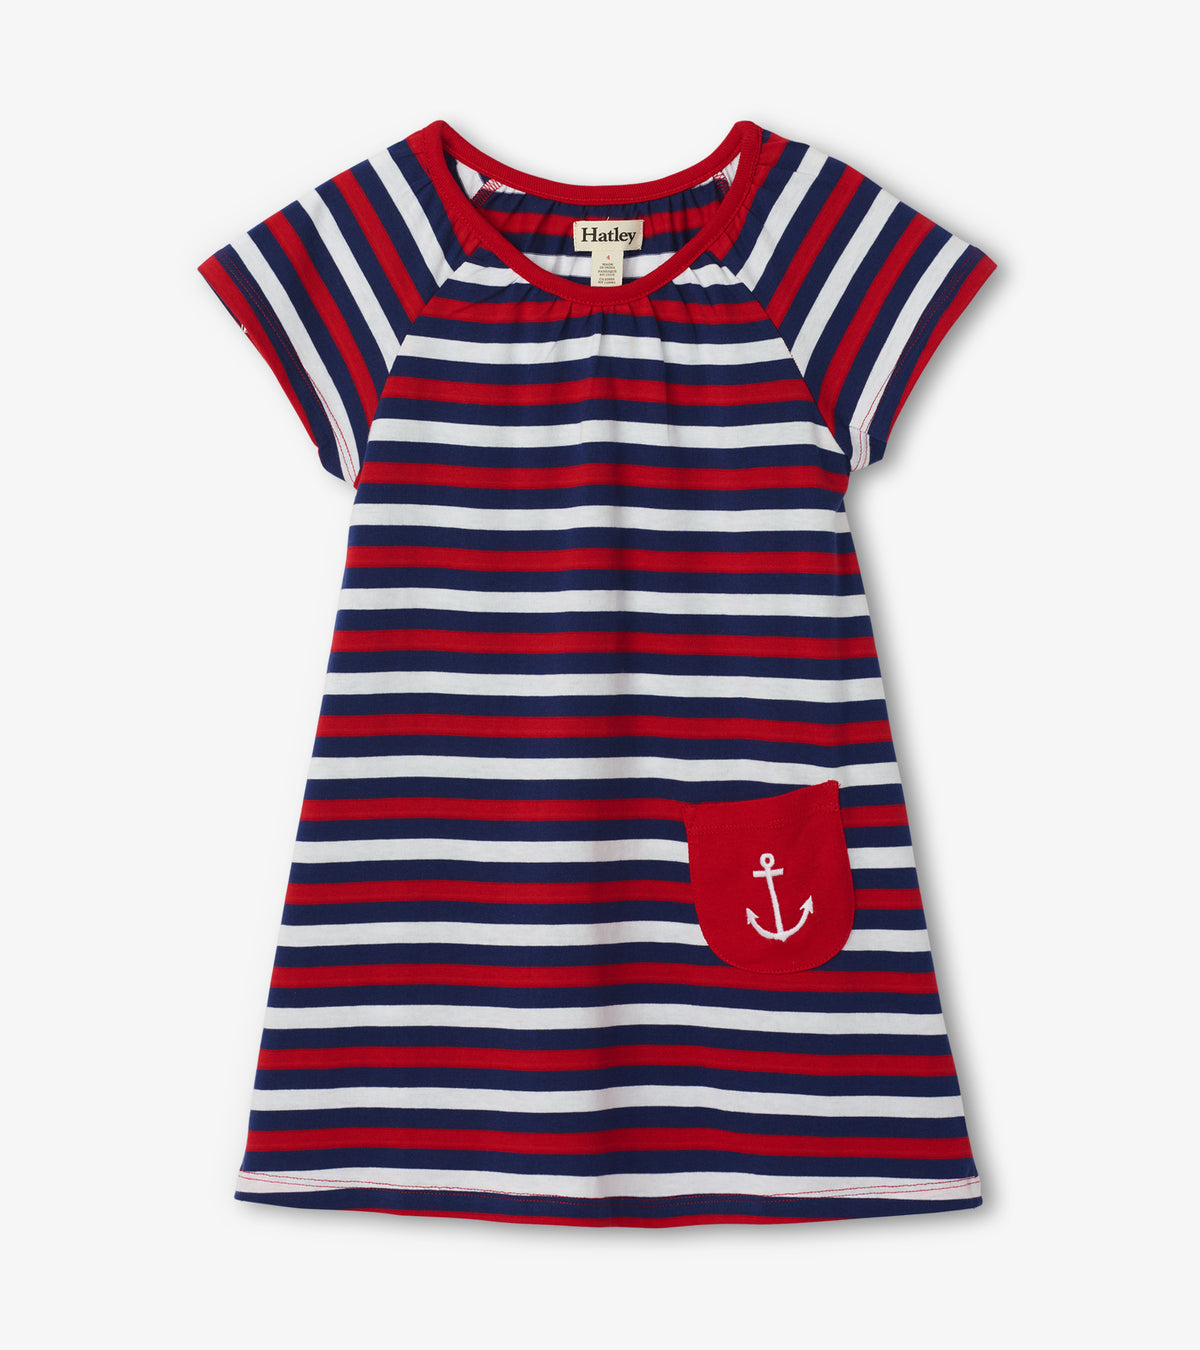 Hatley Tee Shirt Dress - Nautical Stripe